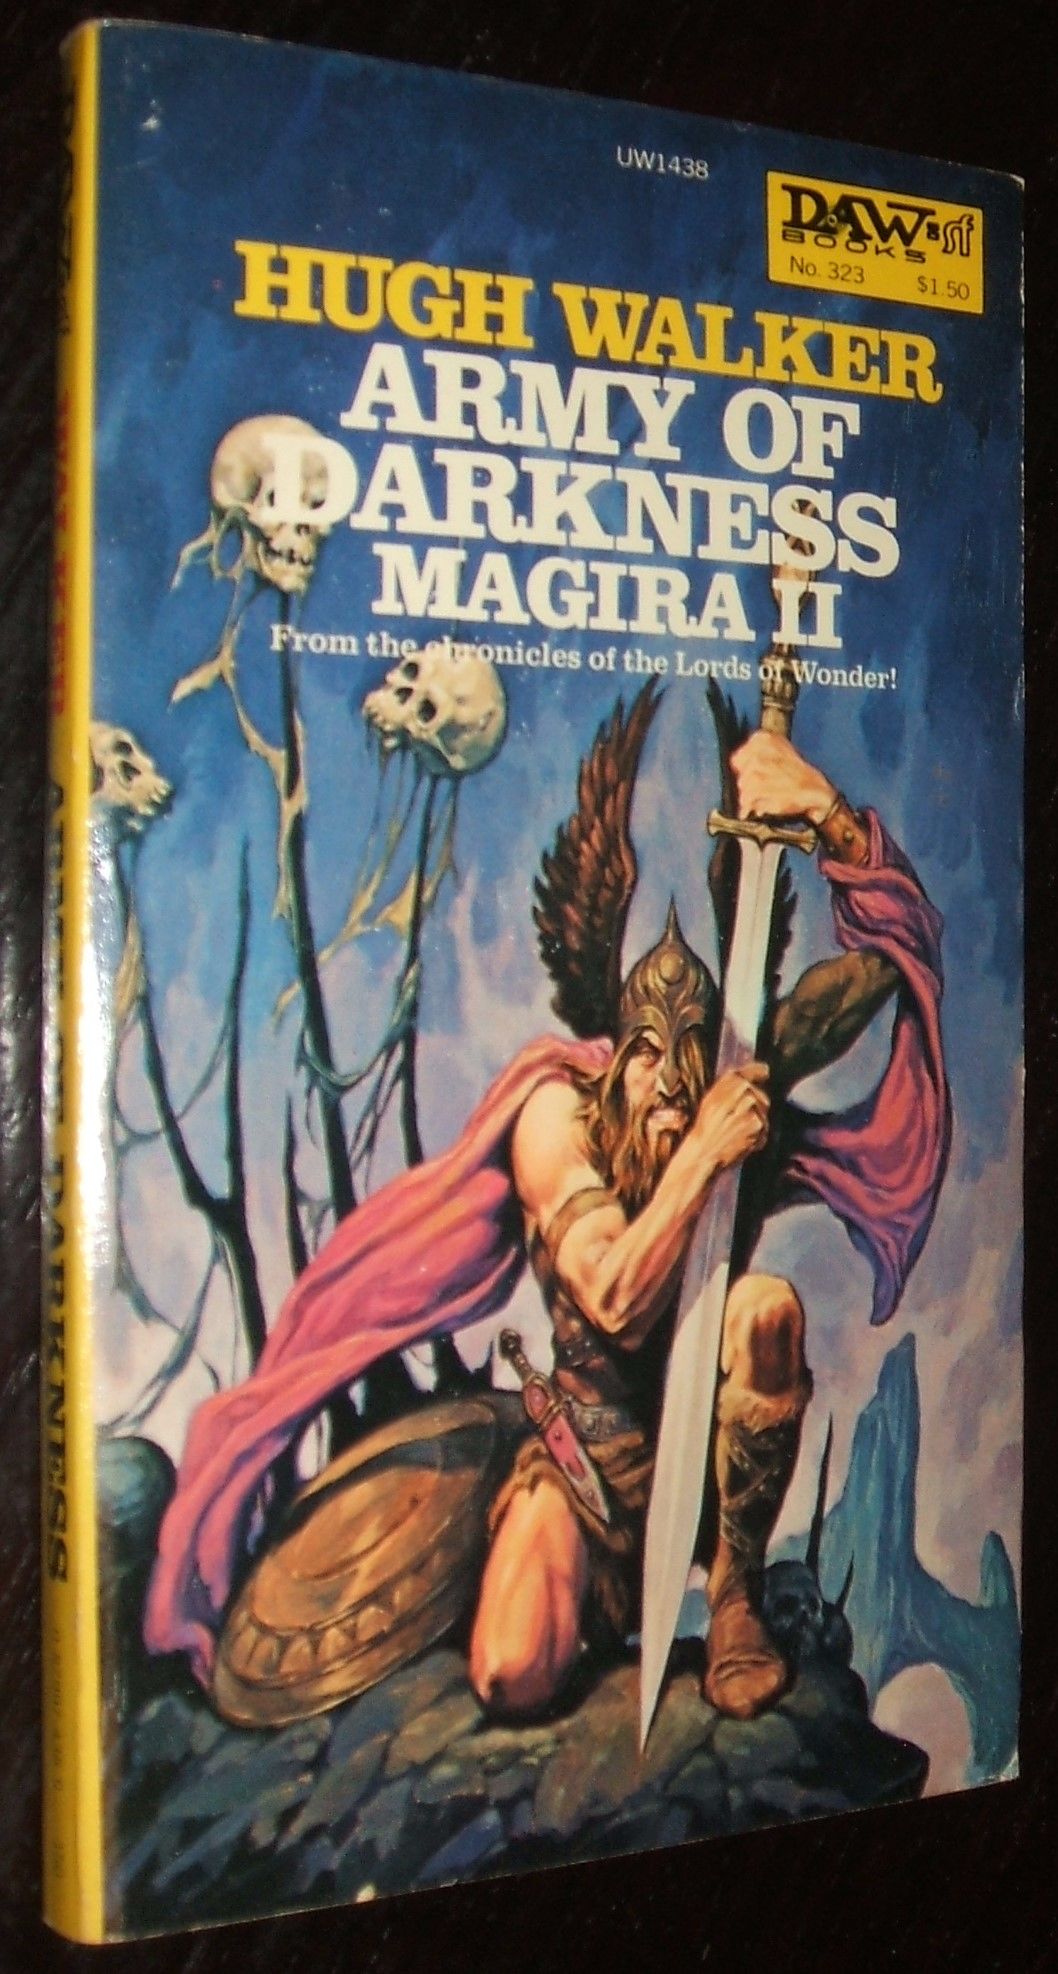 Army of Darkness Magira II - Hugh Walker